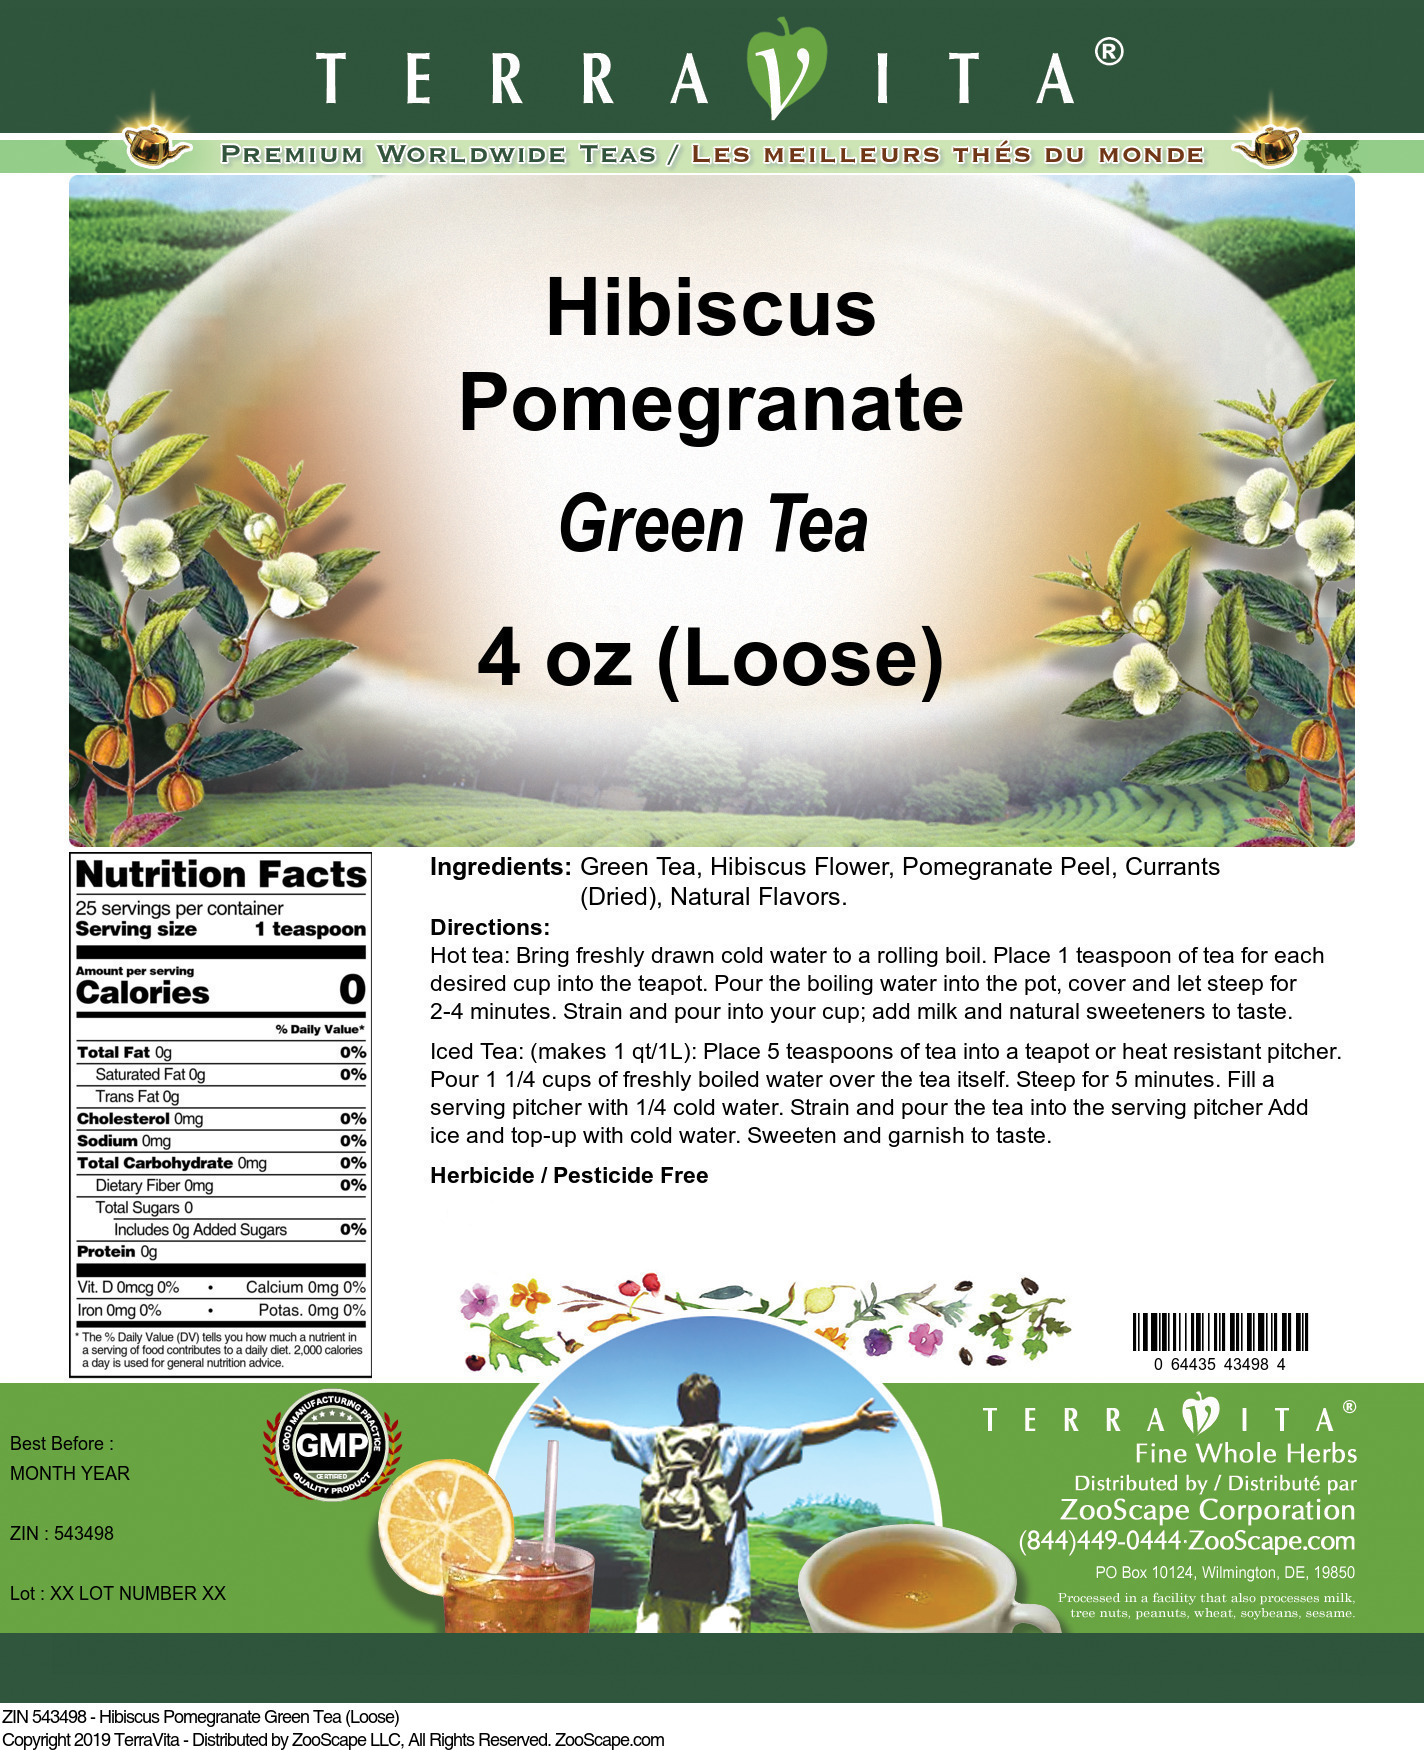 Hibiscus Pomegranate Green Tea (Loose) - Label